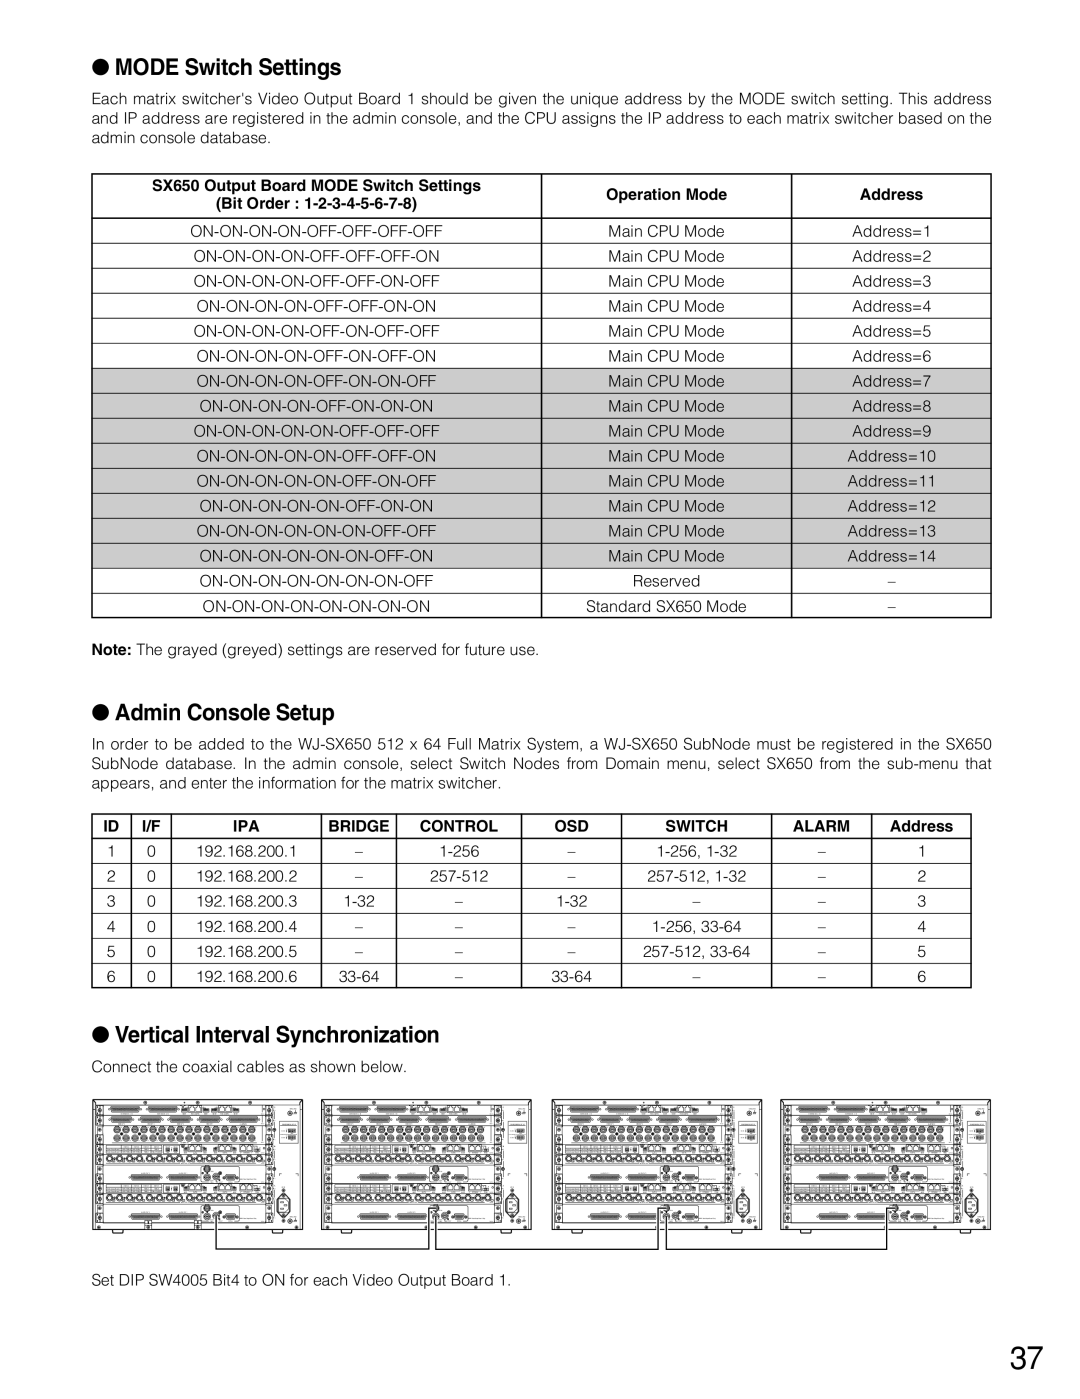 Panasonic WJ-MPU955A manual MODE Switch Settings, Admin Console Setup, Vertical Interval Synchronization 